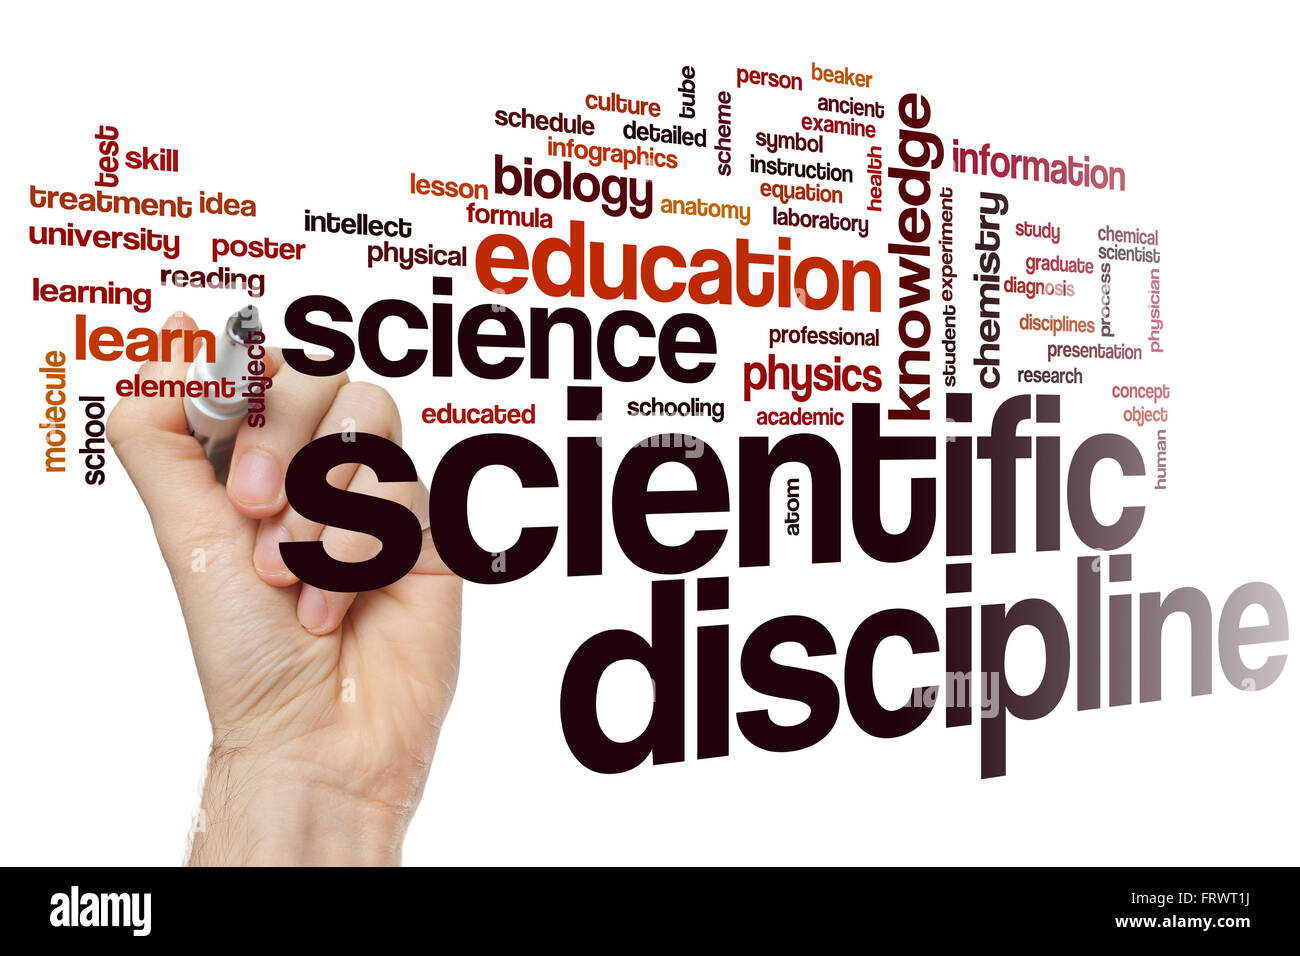 Scientific discipline word cloud concept Stock Photo